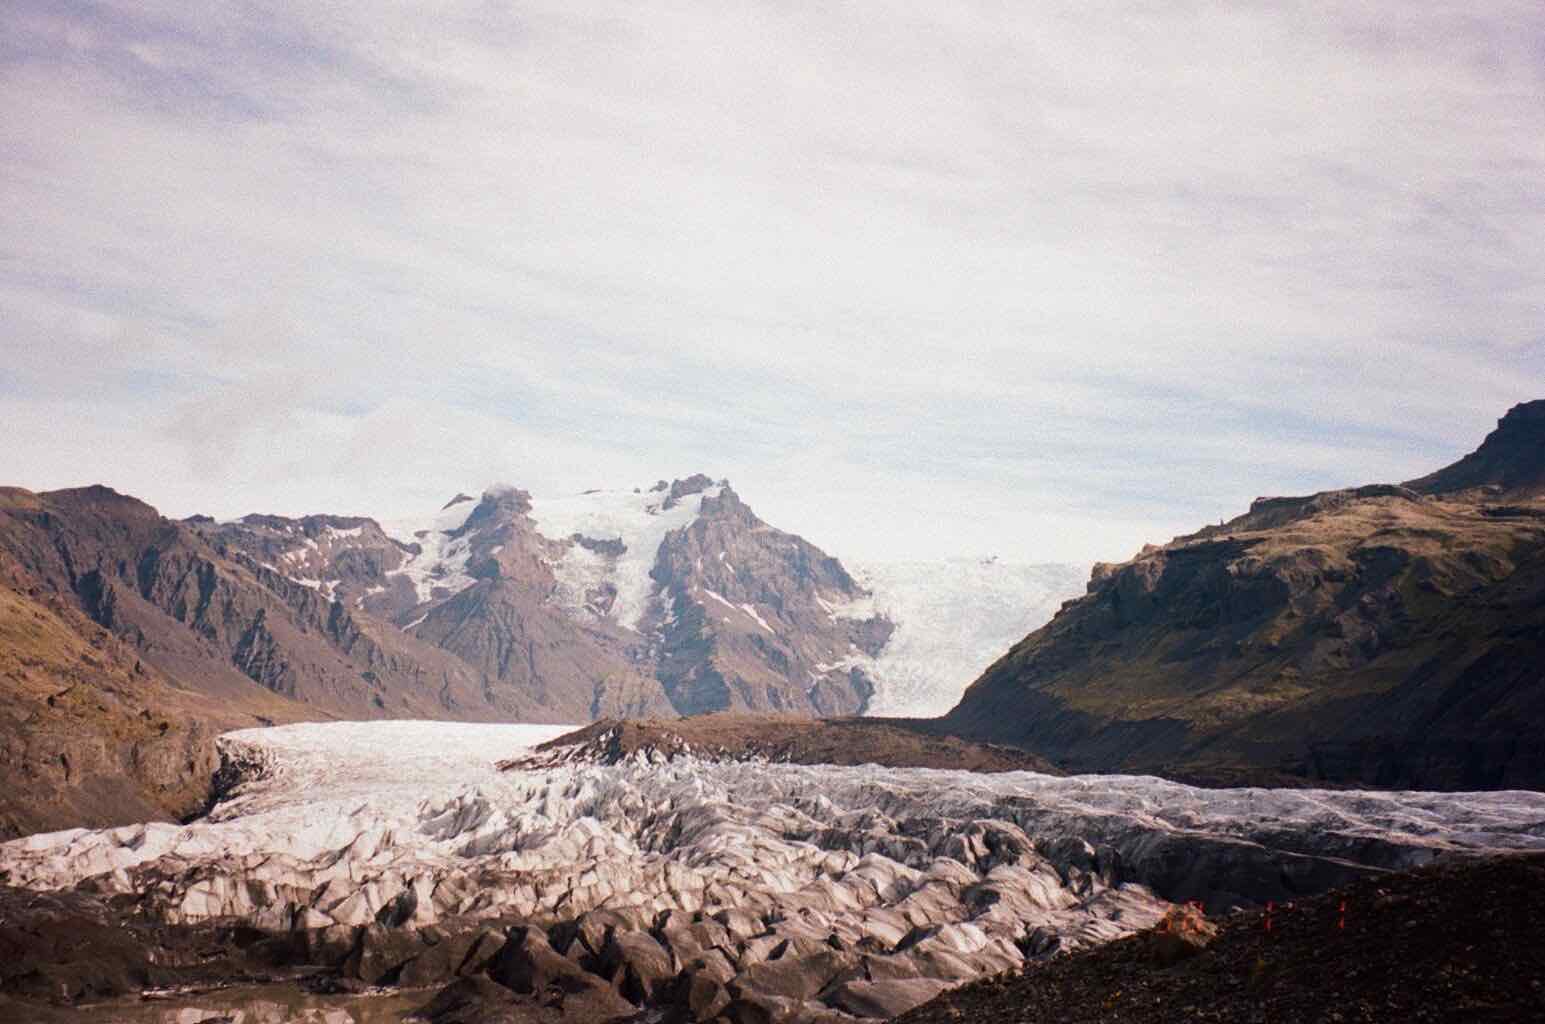 Skalafellsjokull glacier